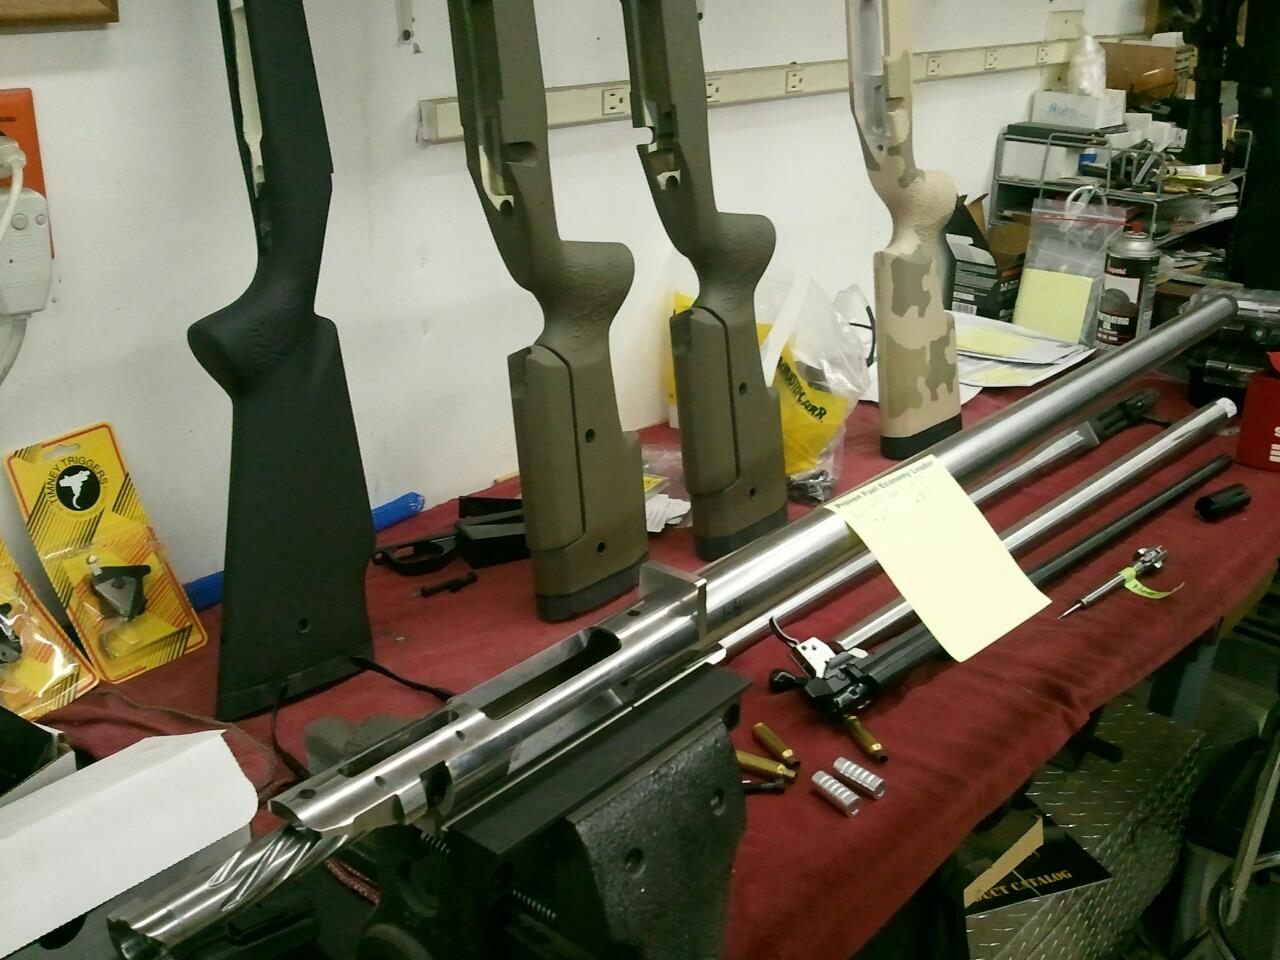 Final assembly of custom rifles